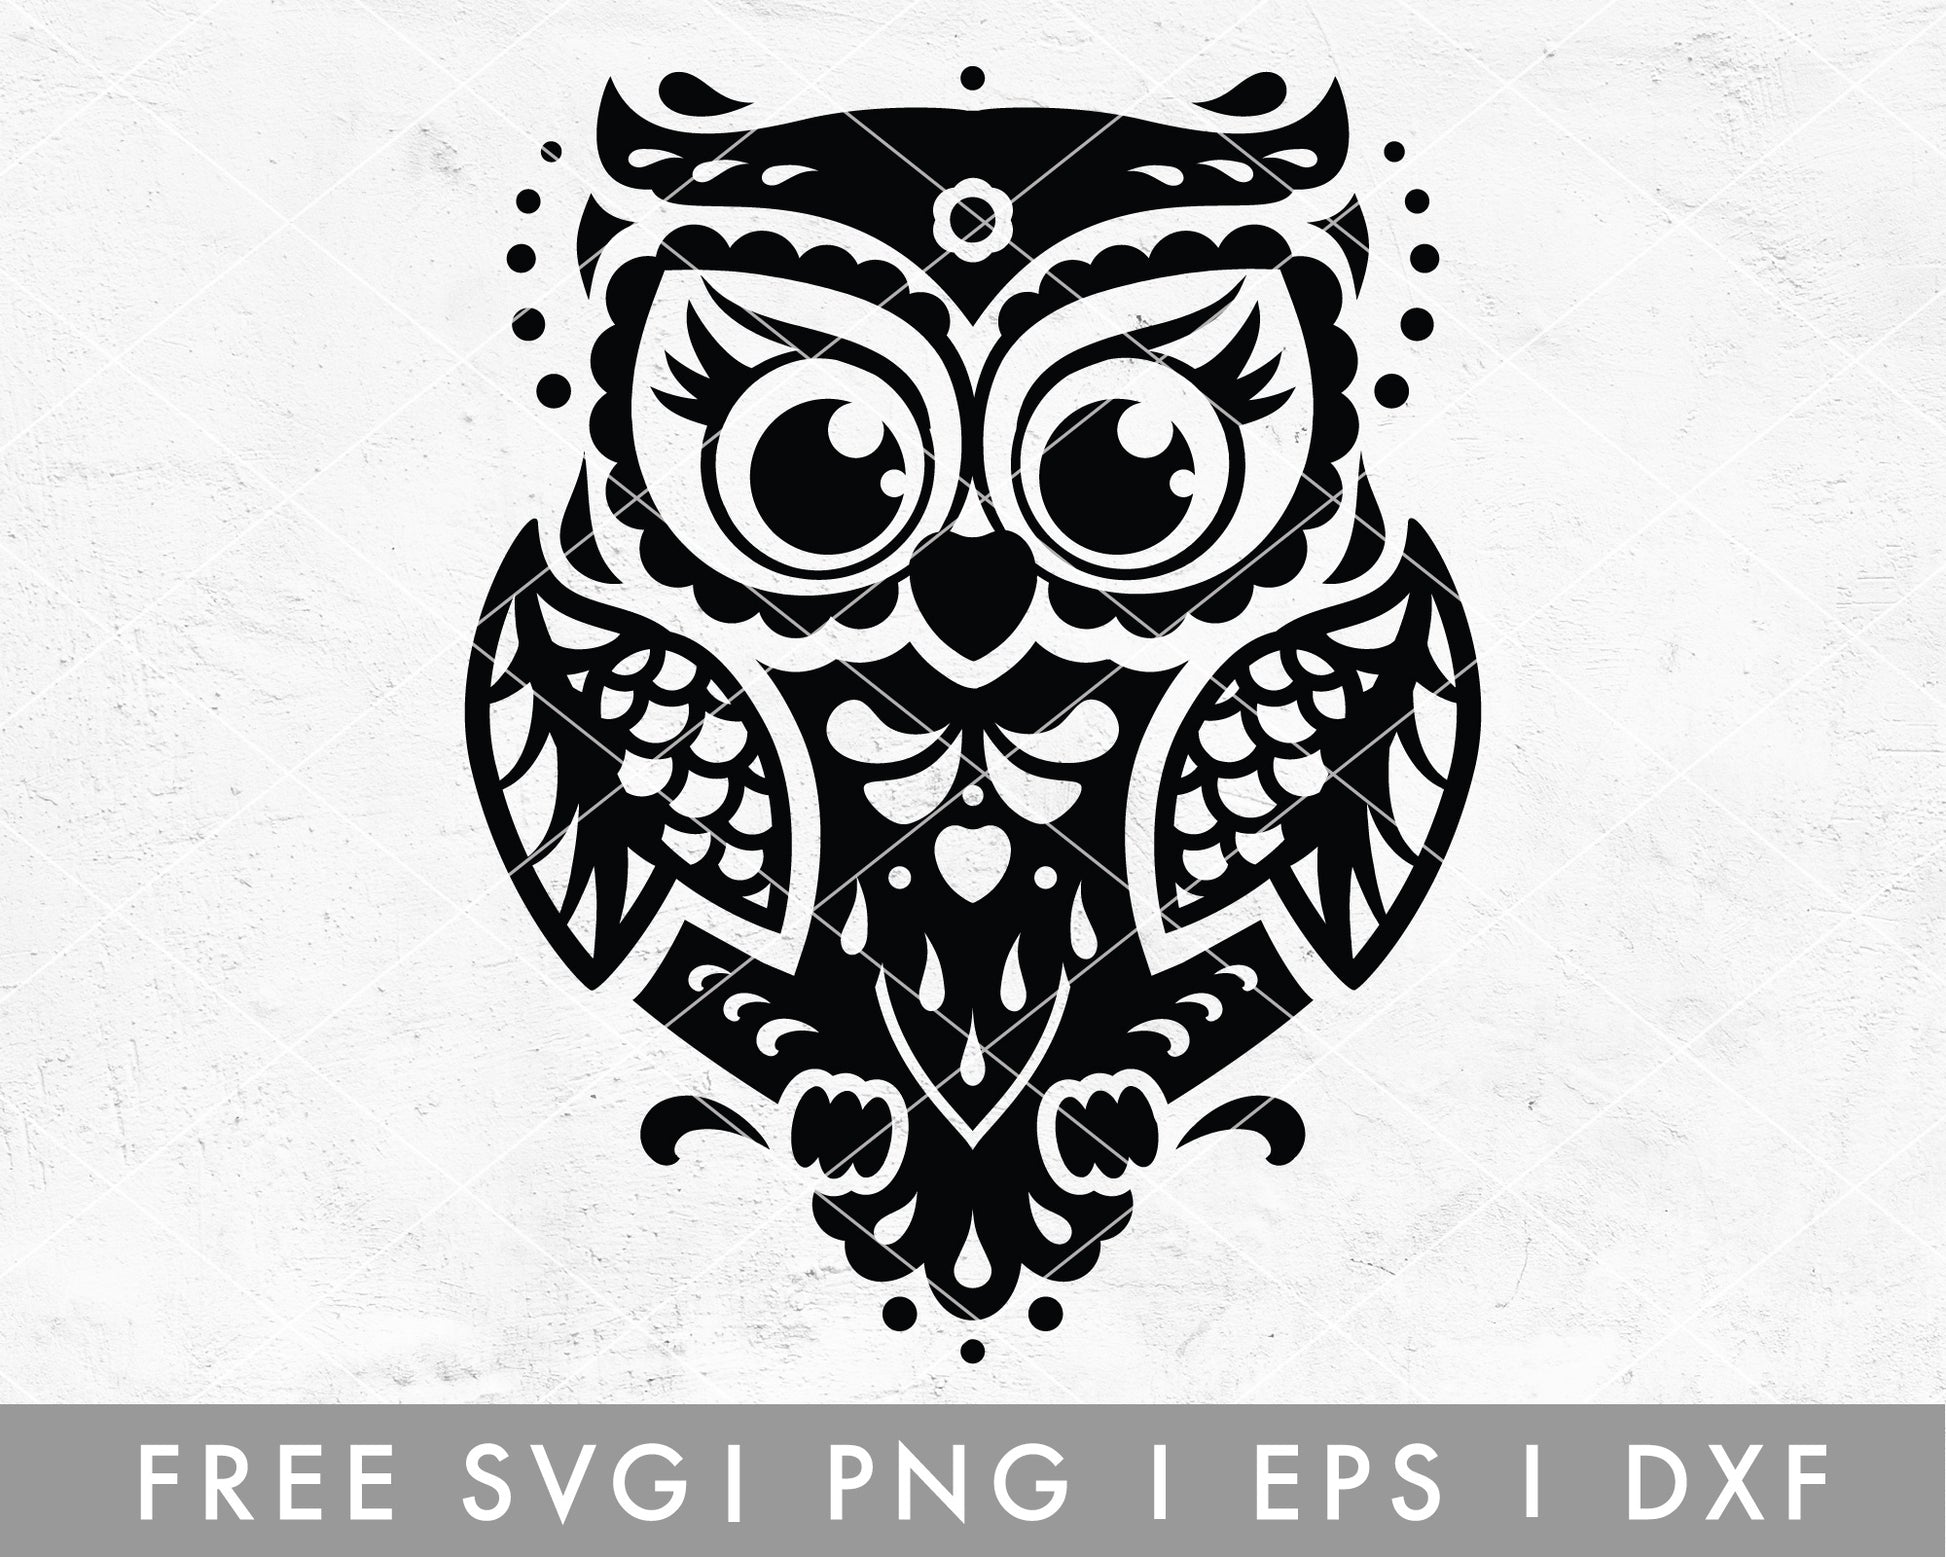 FREE FREE Mandala SVG | Mandala Owl SVG Cut File for Cricut, Cameo Silhouette | Free SVG Cut File